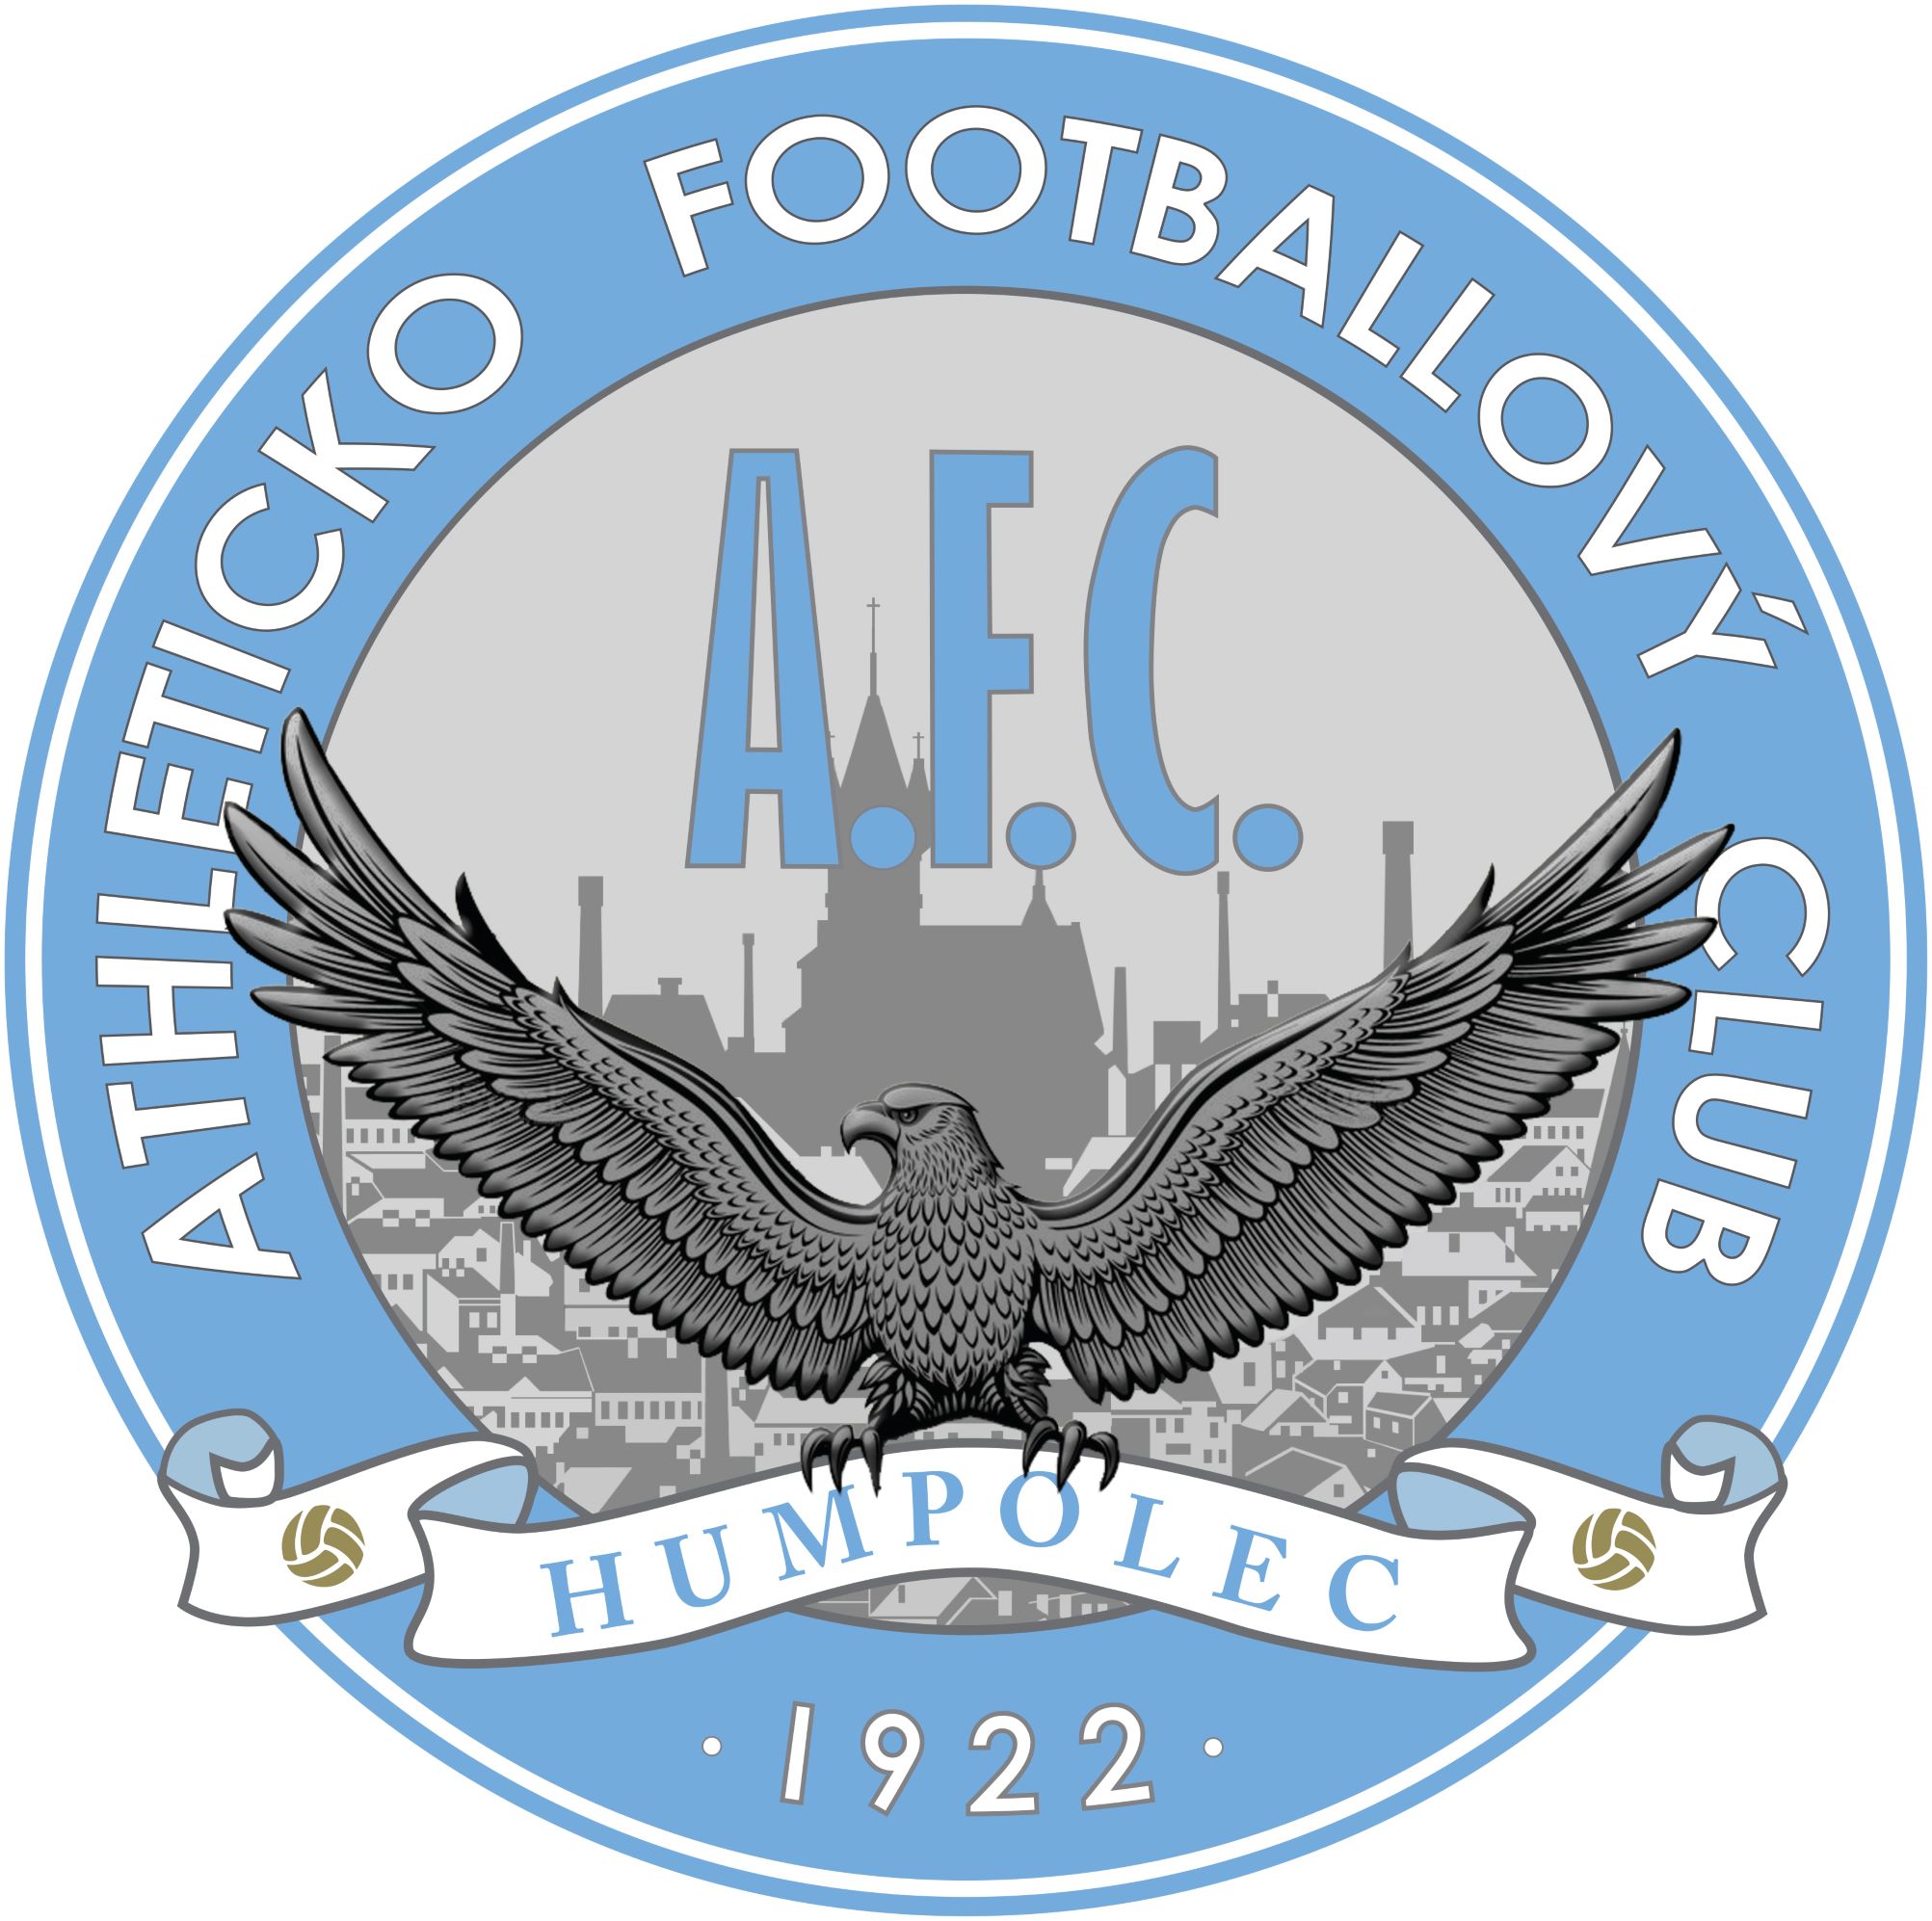 ATHLETICKO-FOOTBALLOVY CLUB HUMPOLEC o.s.